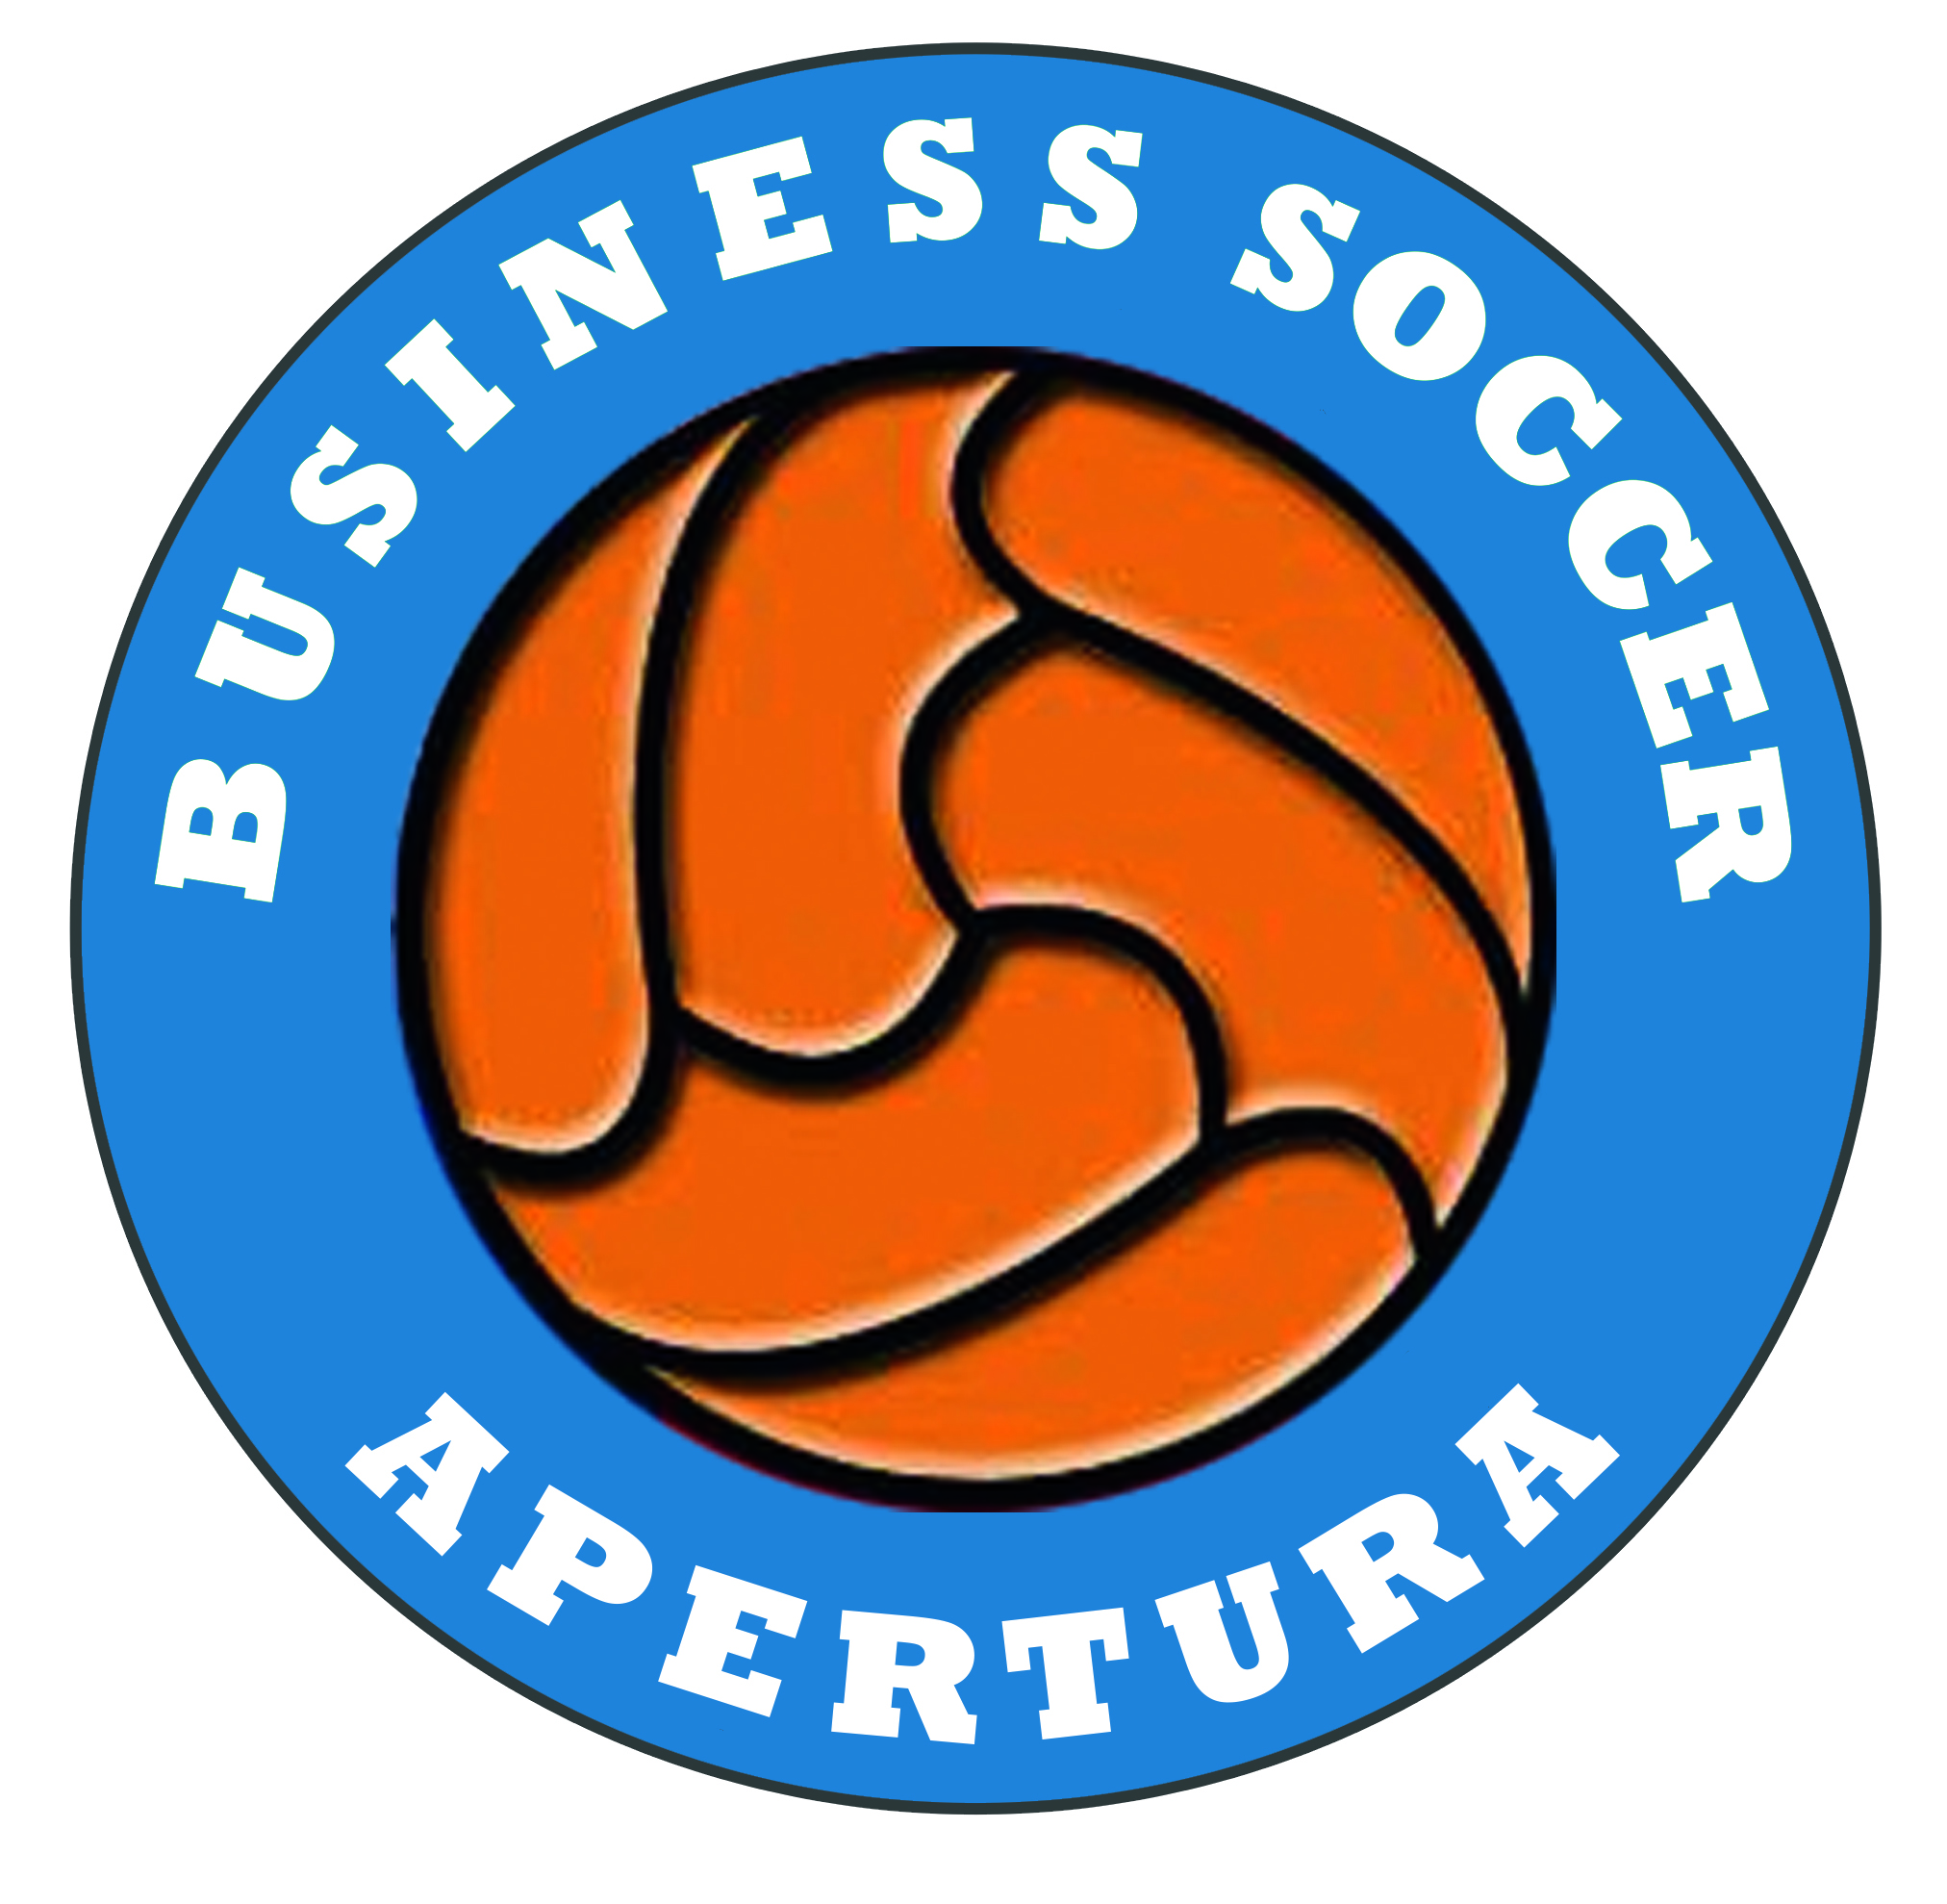 evento copa liga futbol madrid organizar empresas gestion club deportivo